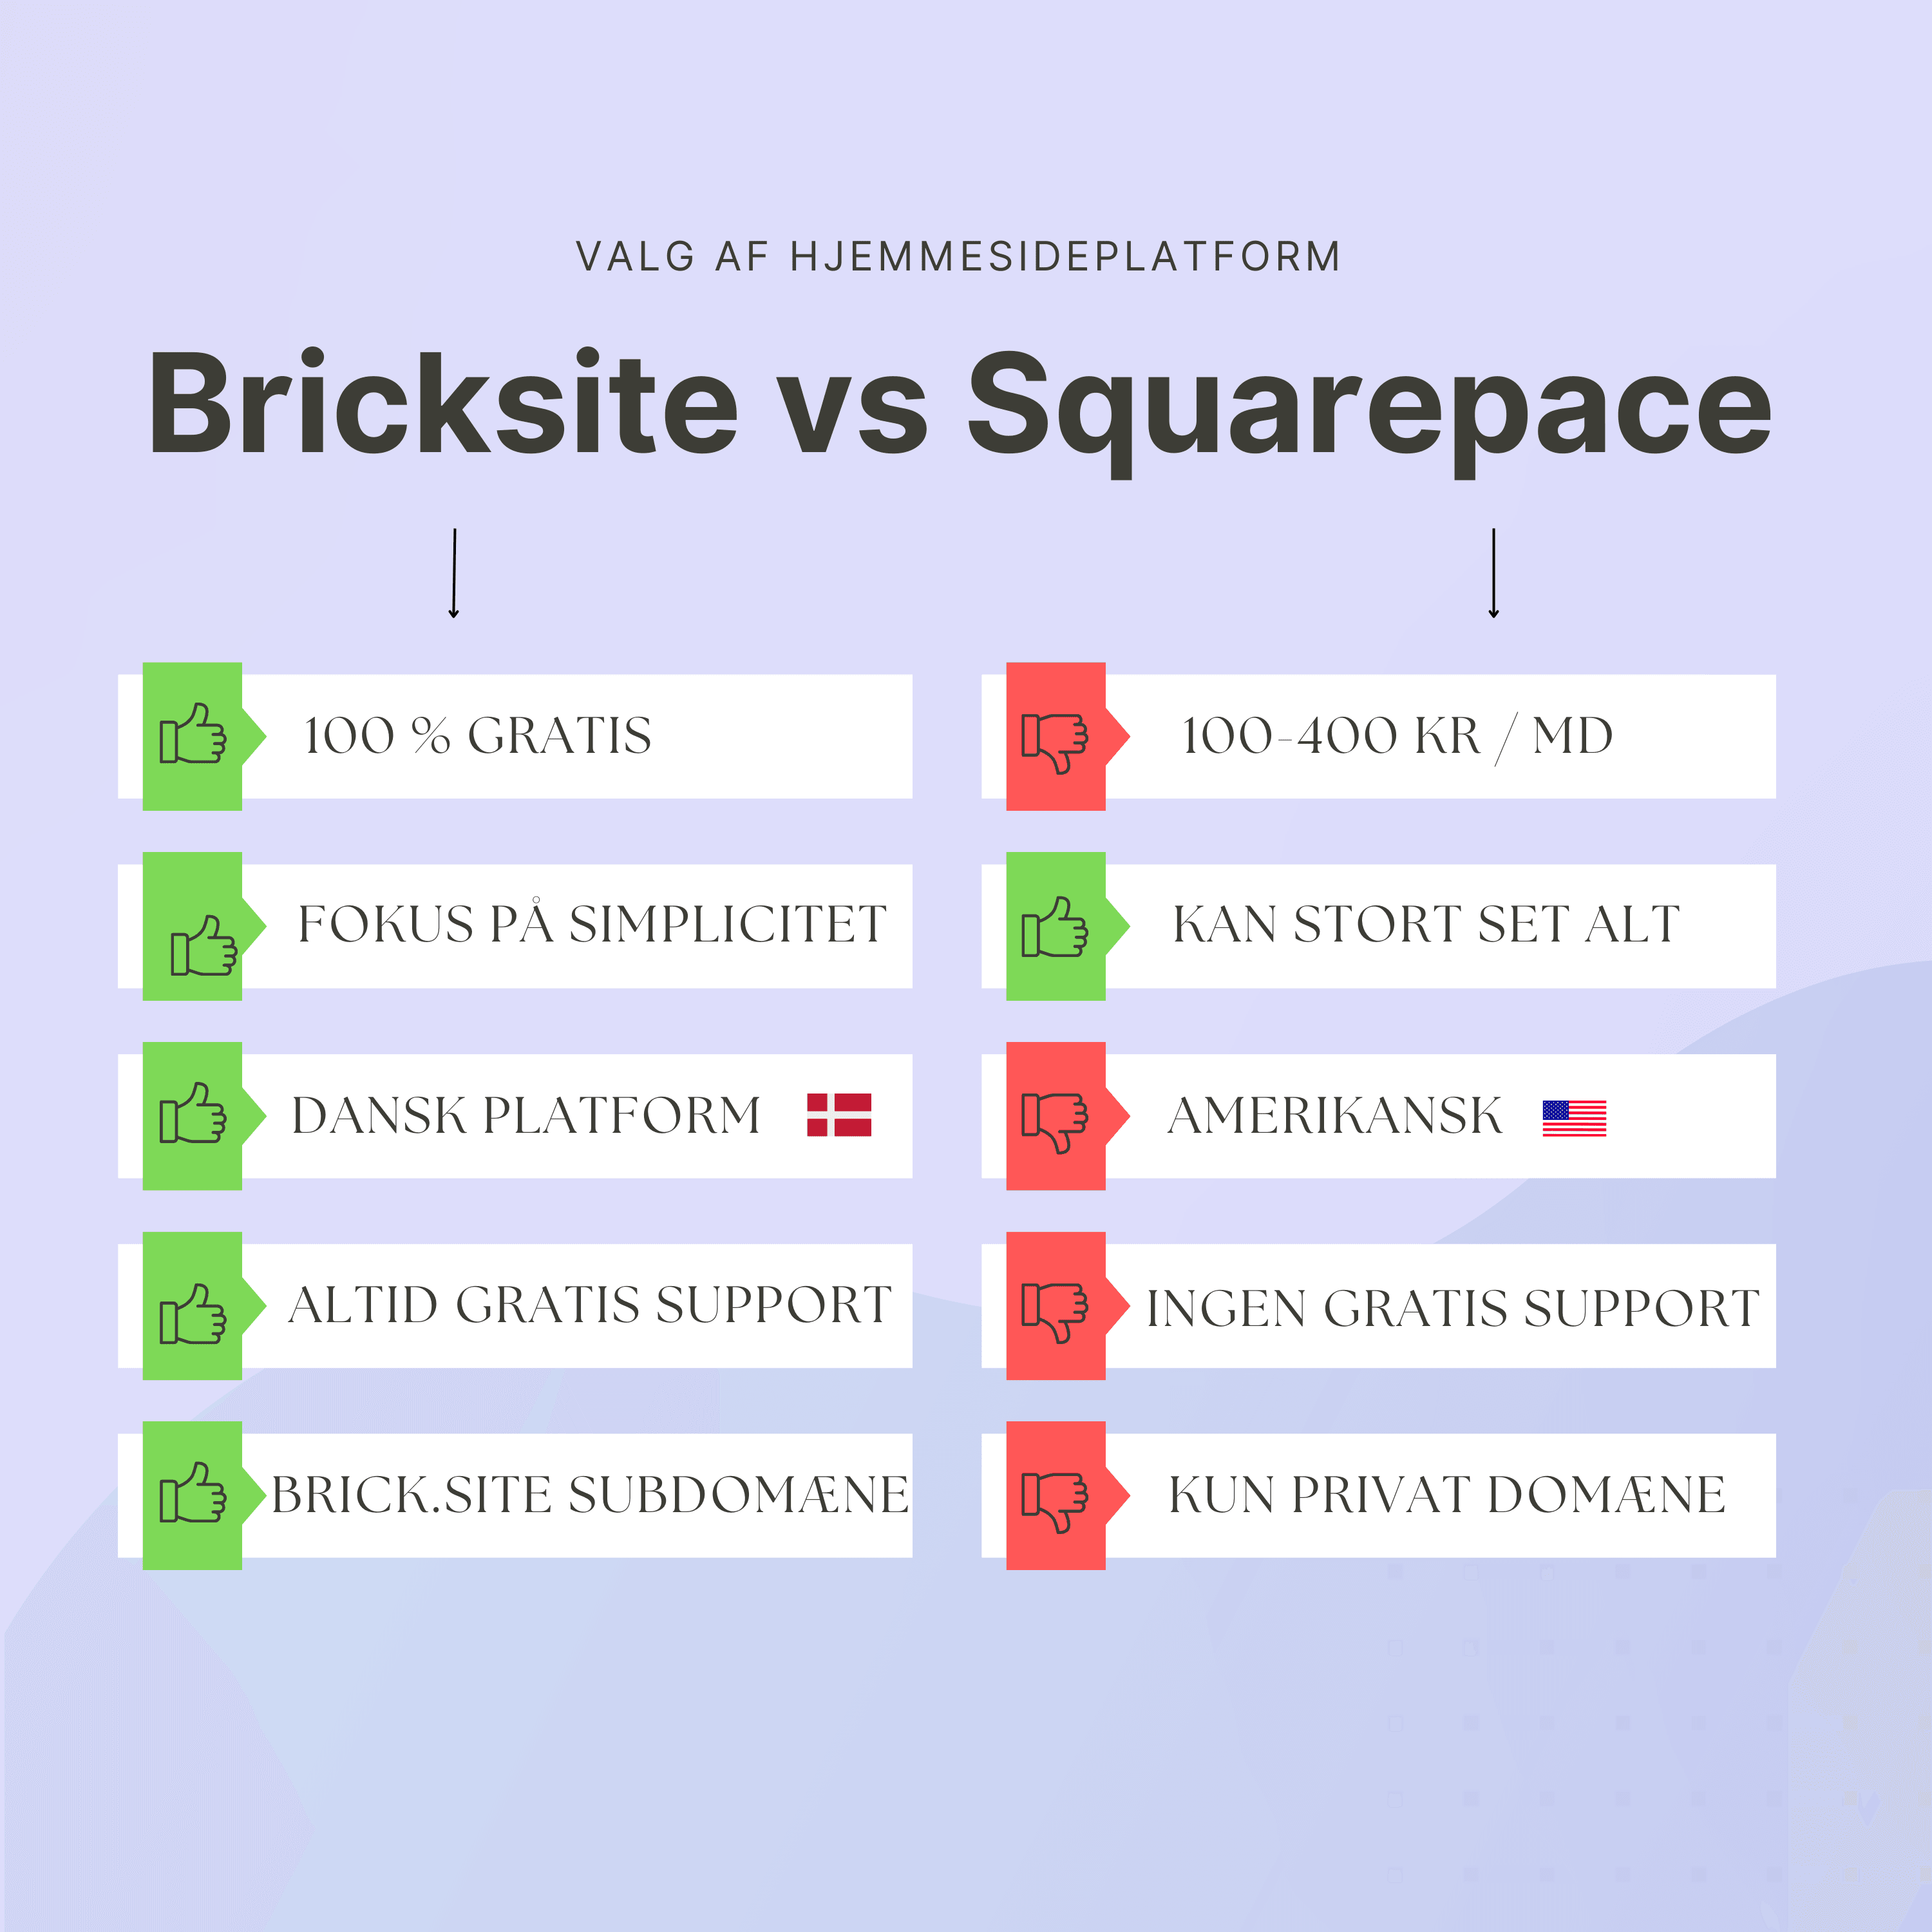 Konklusion: Bricksite vs squarespace